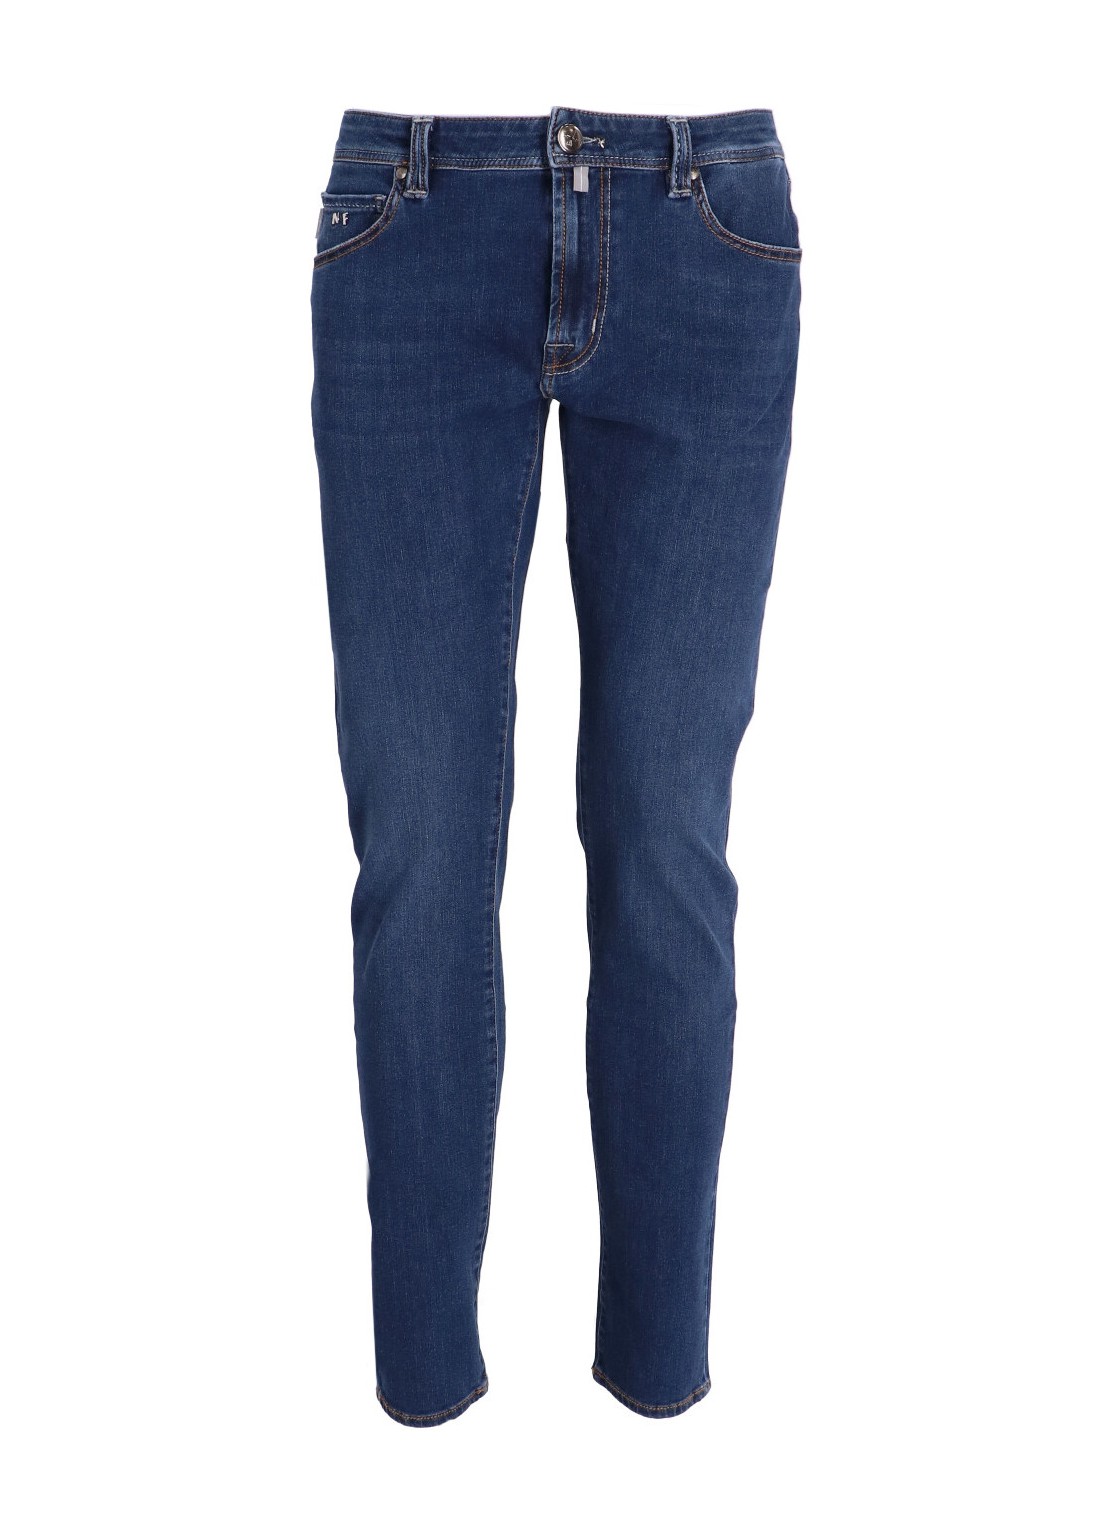 Pantalon jeans tramarossa denim man leonardo zip stre leonardo zip stre 23i20 talla 33
 